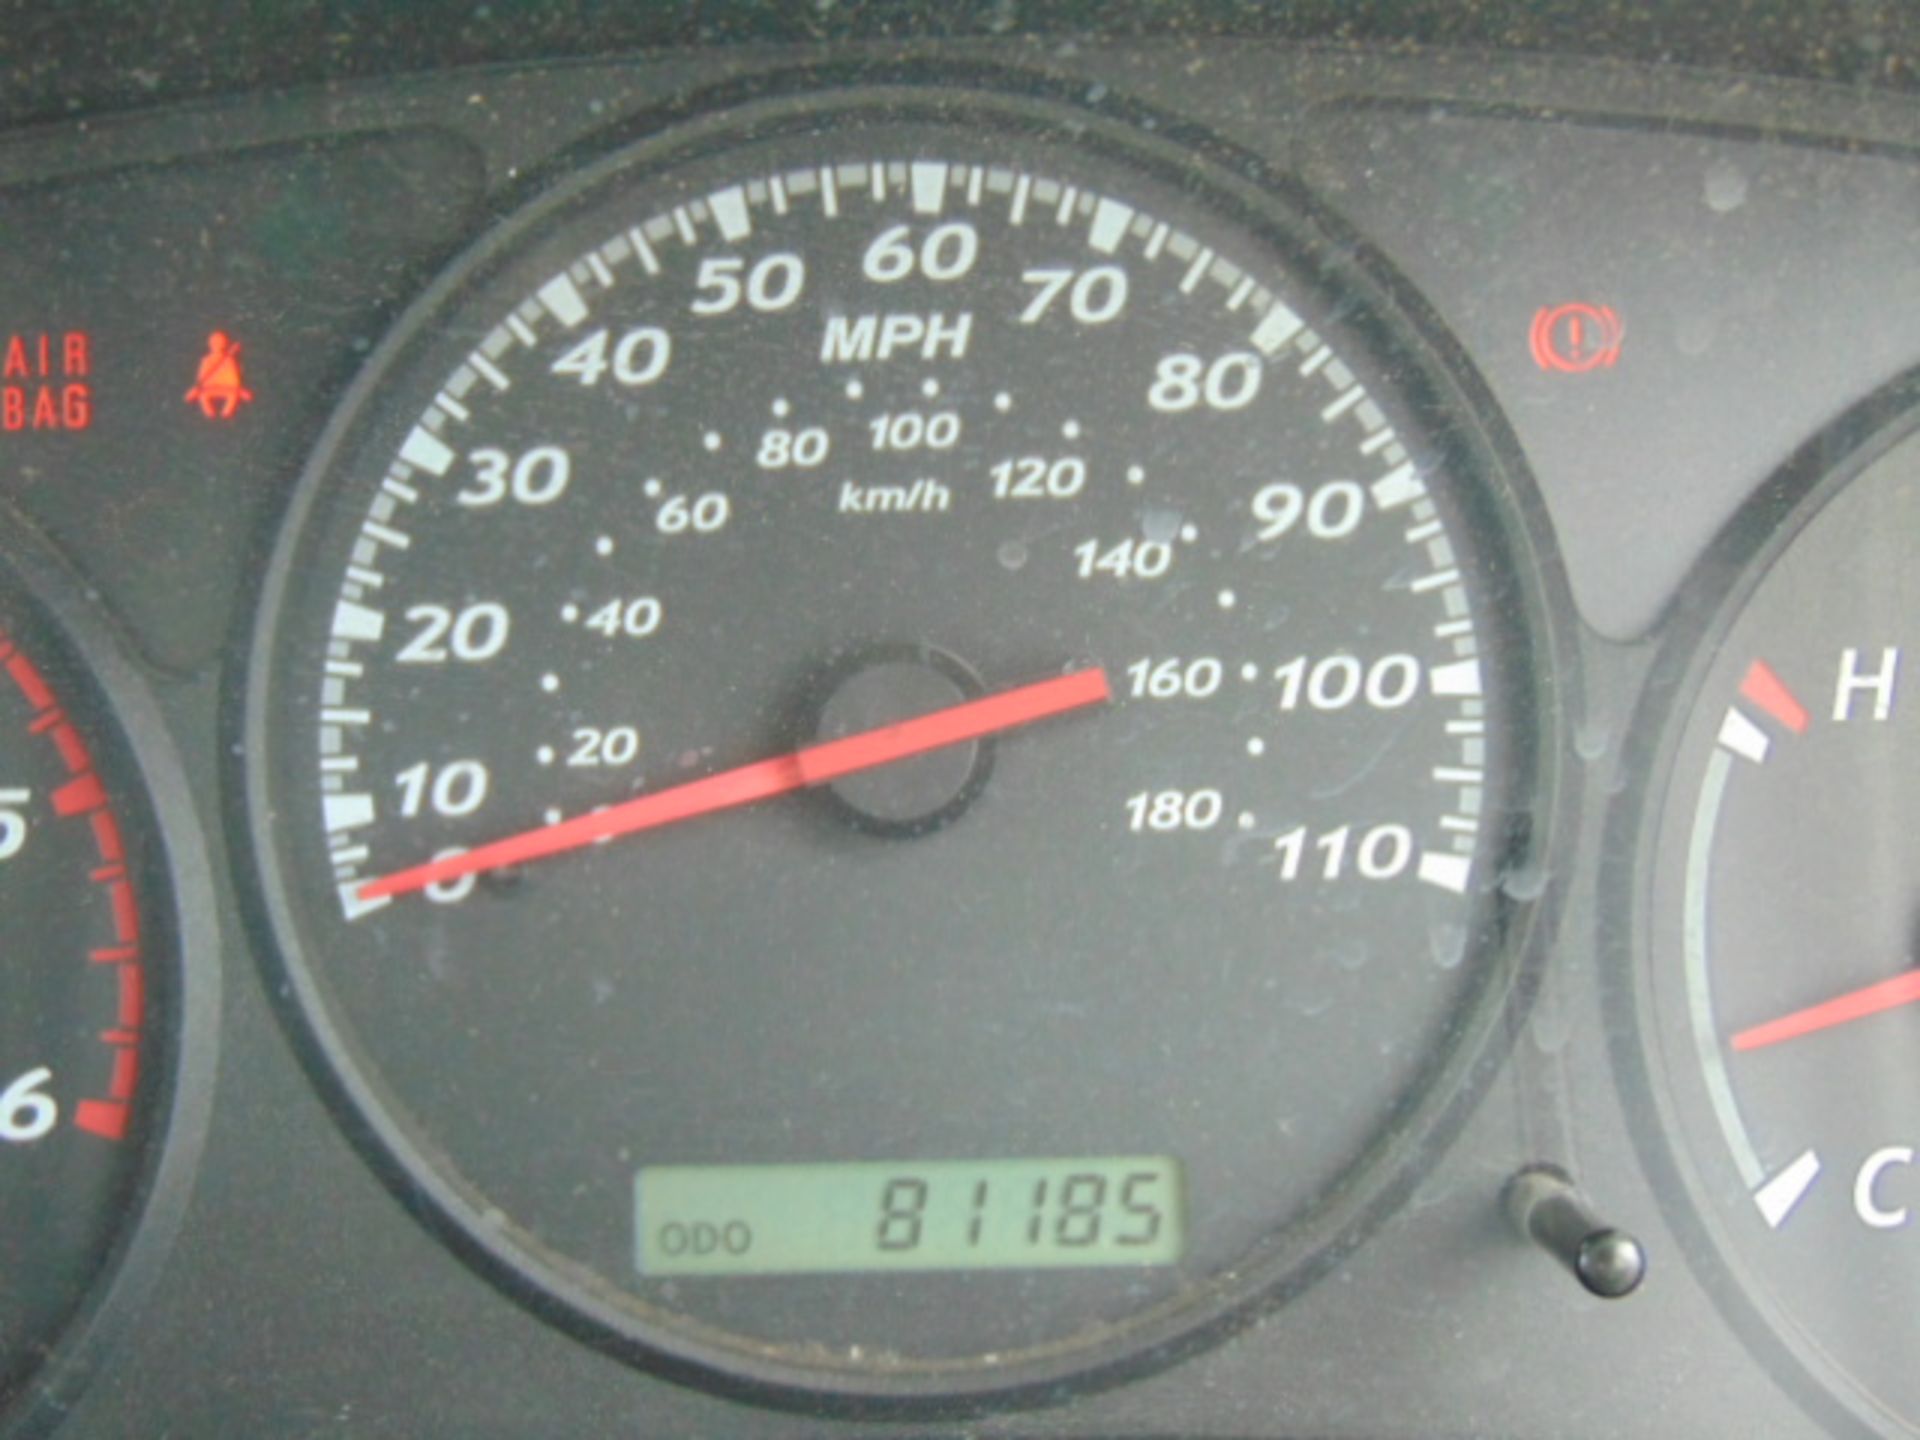 2004 Isuzu D-Max Double Cab 3.0 Diesel 4 x 4 Pickup 81,185 miles - Image 12 of 18